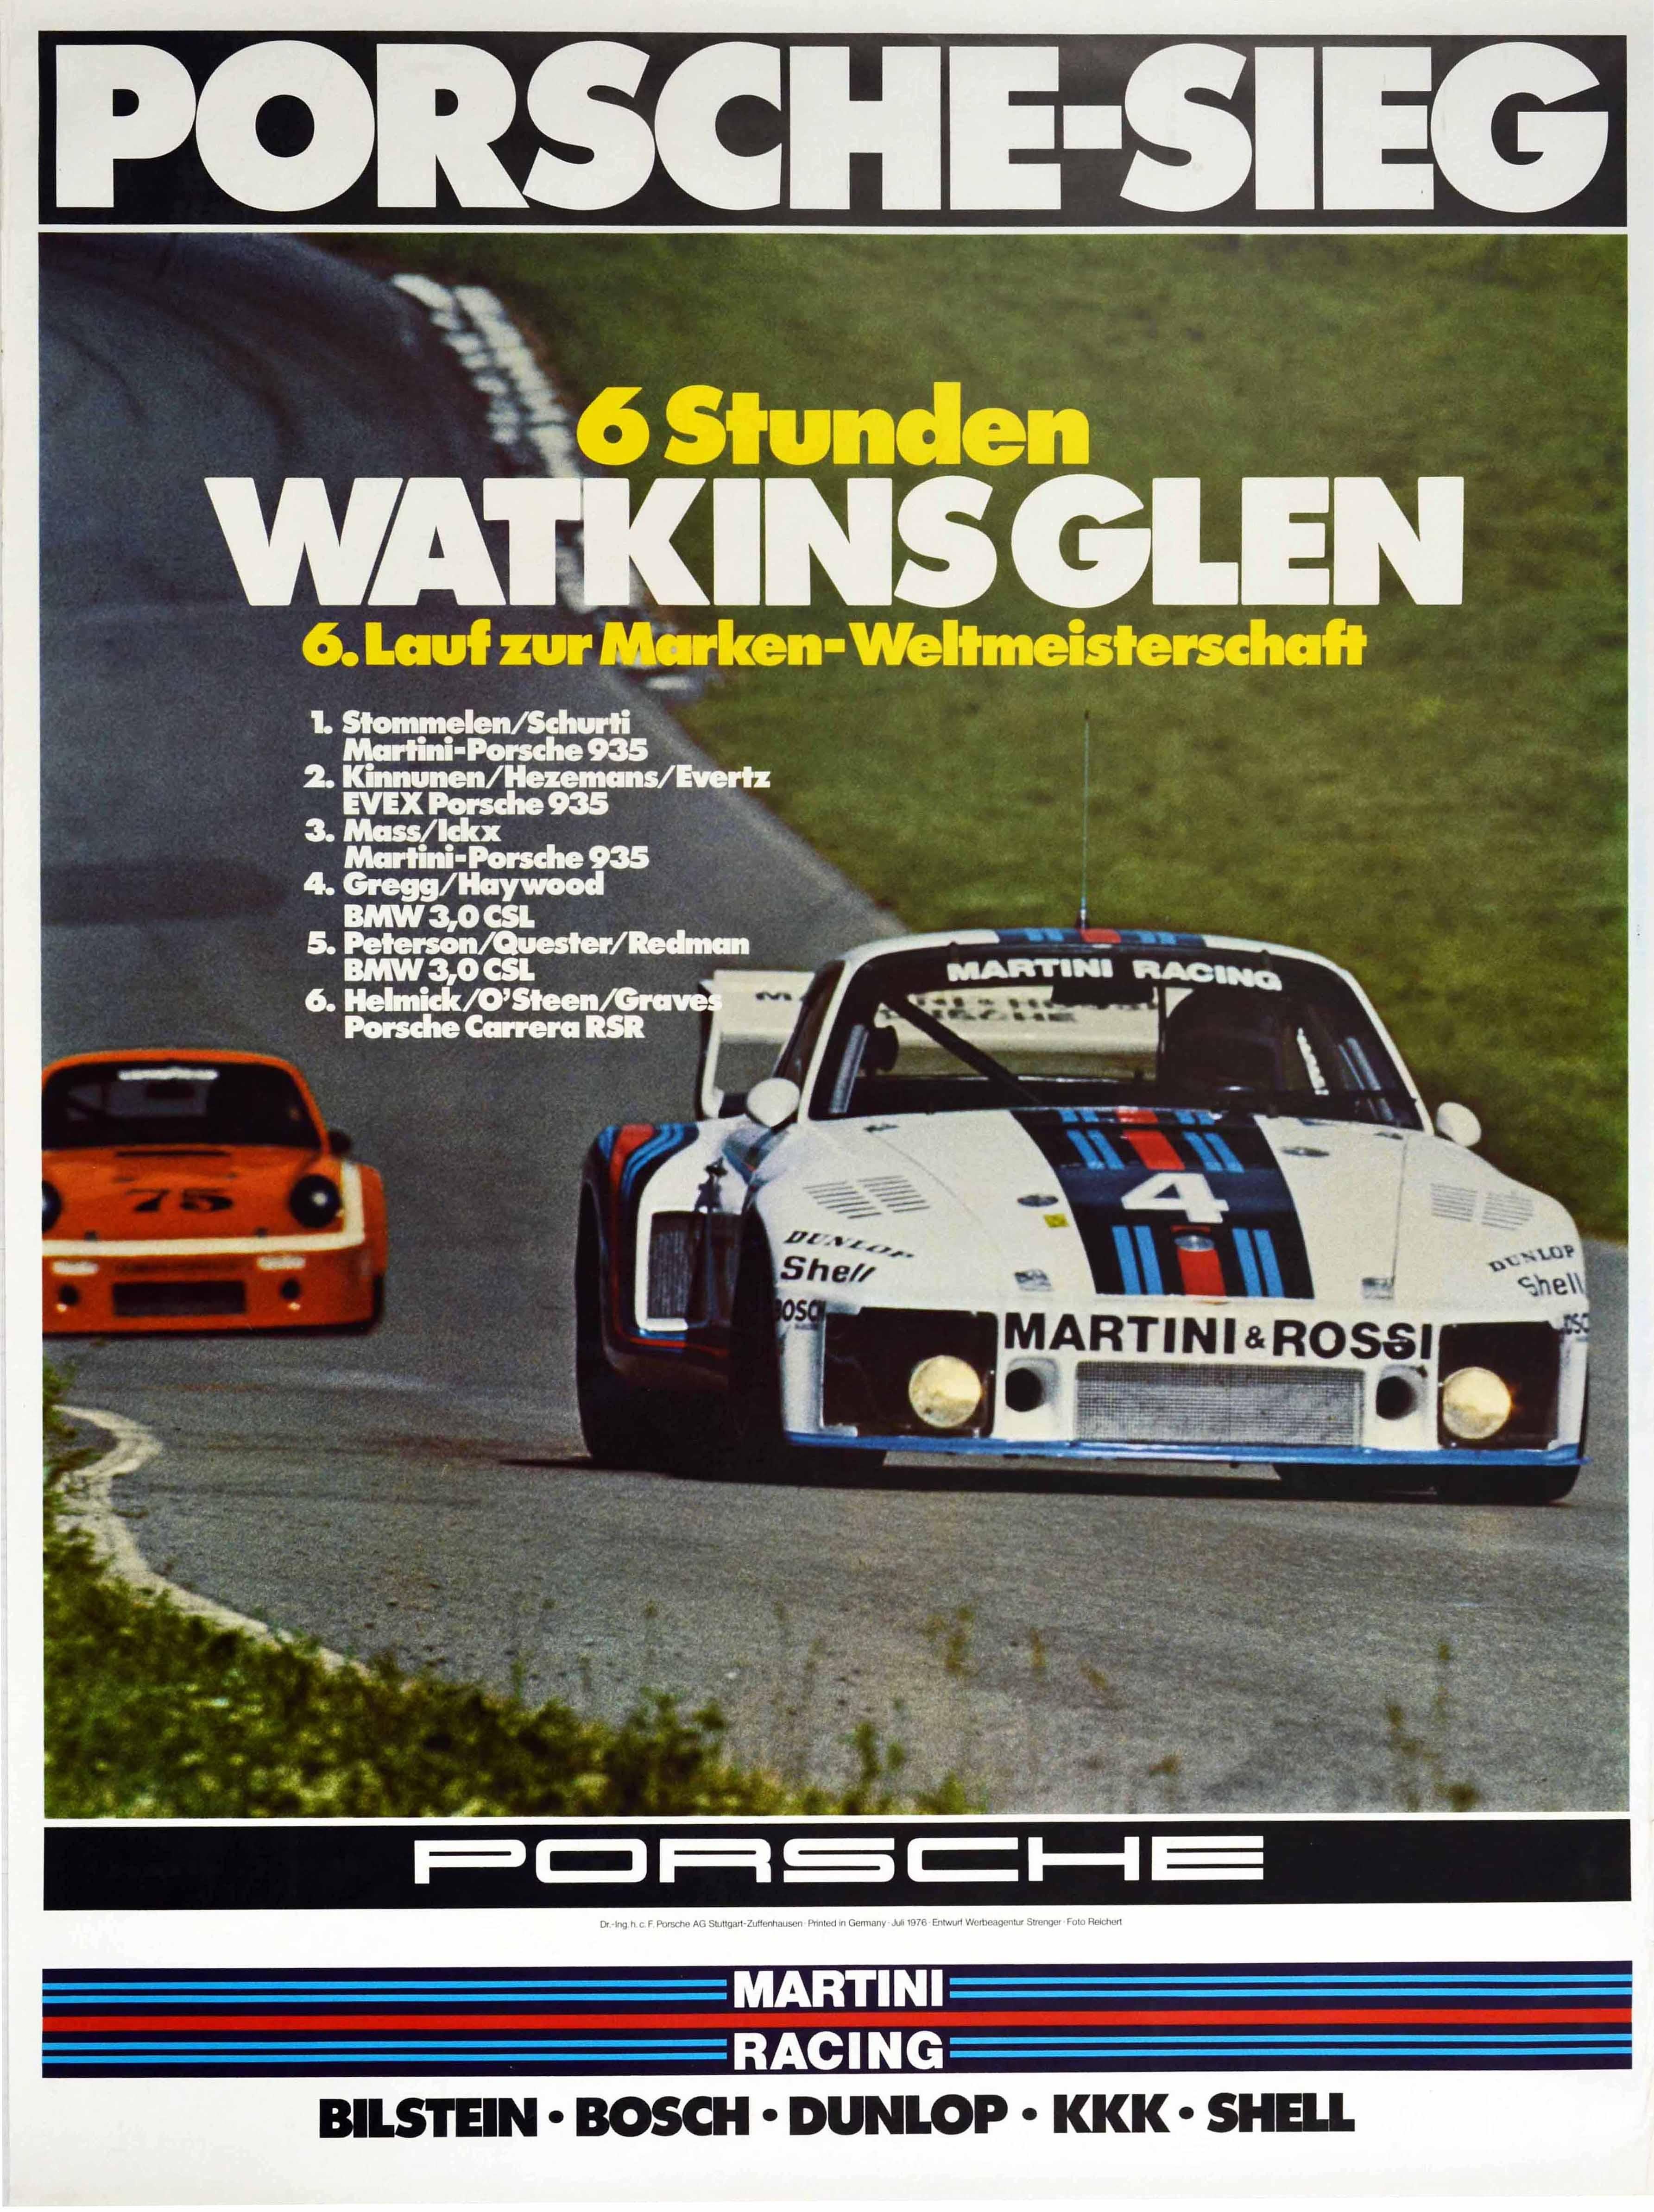 Unknown Print - Original Vintage Poster Porsche 935 Watkins Glen Auto Racing Sports Car Victory